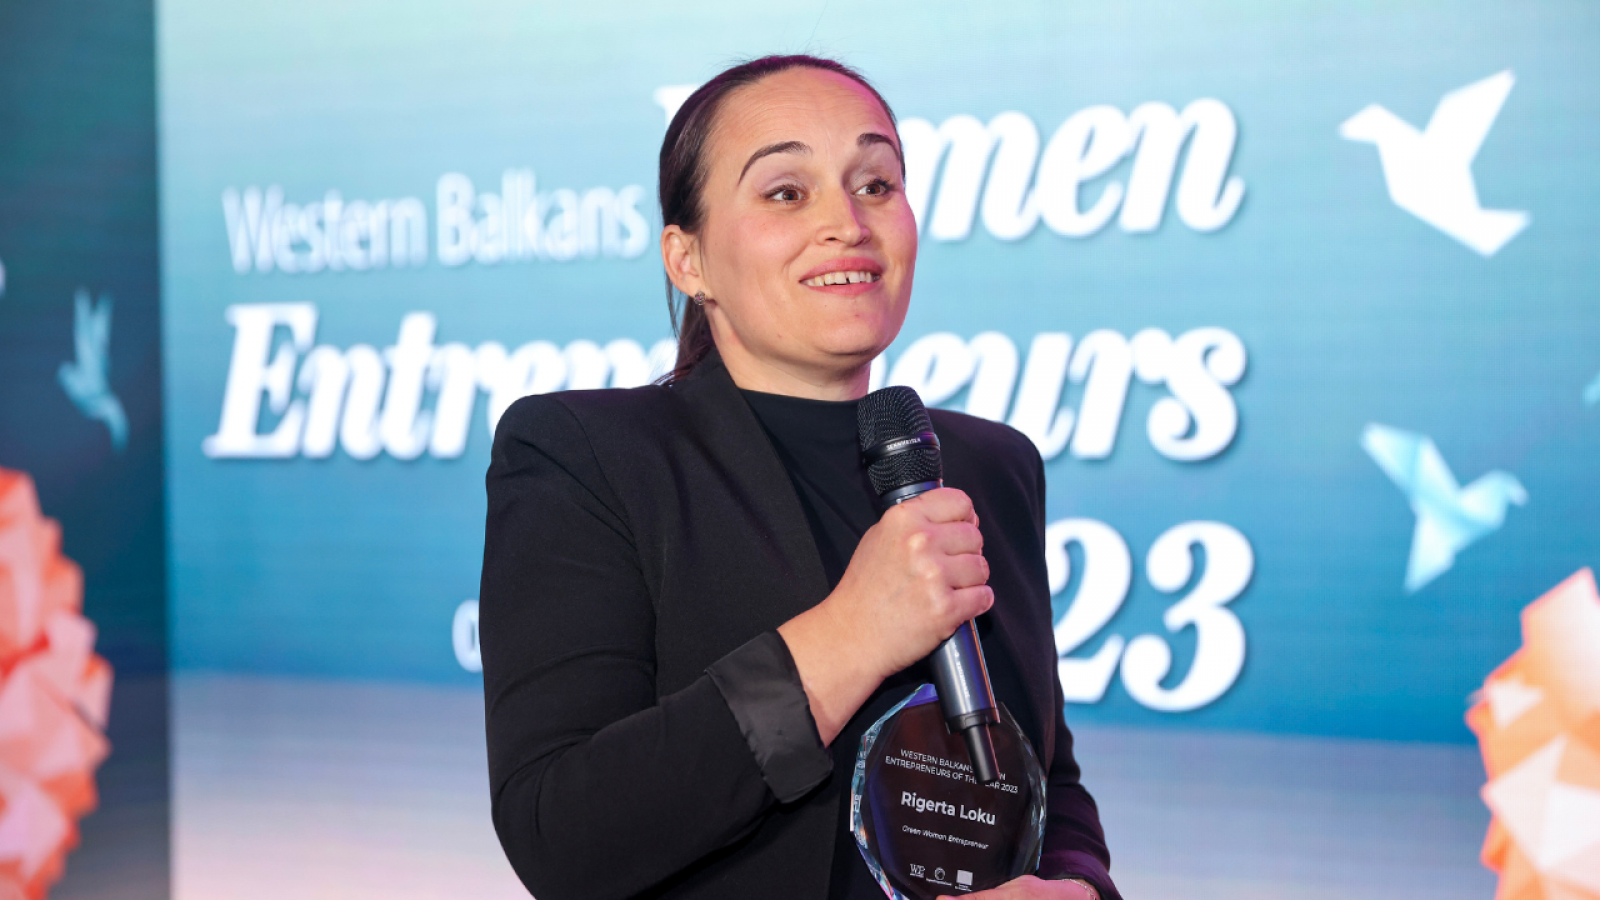 Meet Rigerta Loku the #WesternBalkans Green Woman Entrepreneur of 2023!